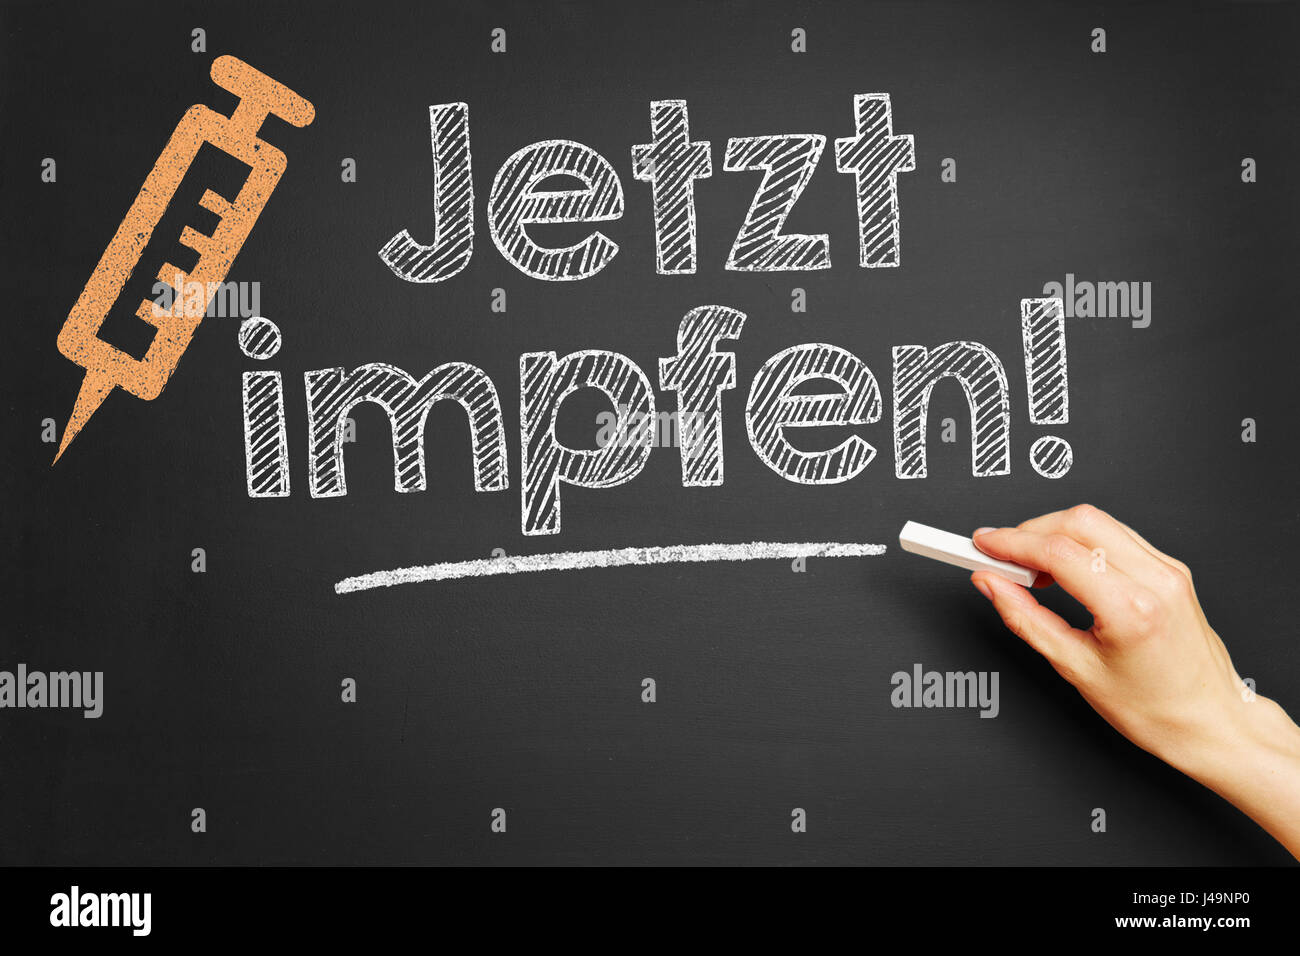 German slogan 'Jetzt impfen' (vaccinate now) written with chalk on blackboard Stock Photo